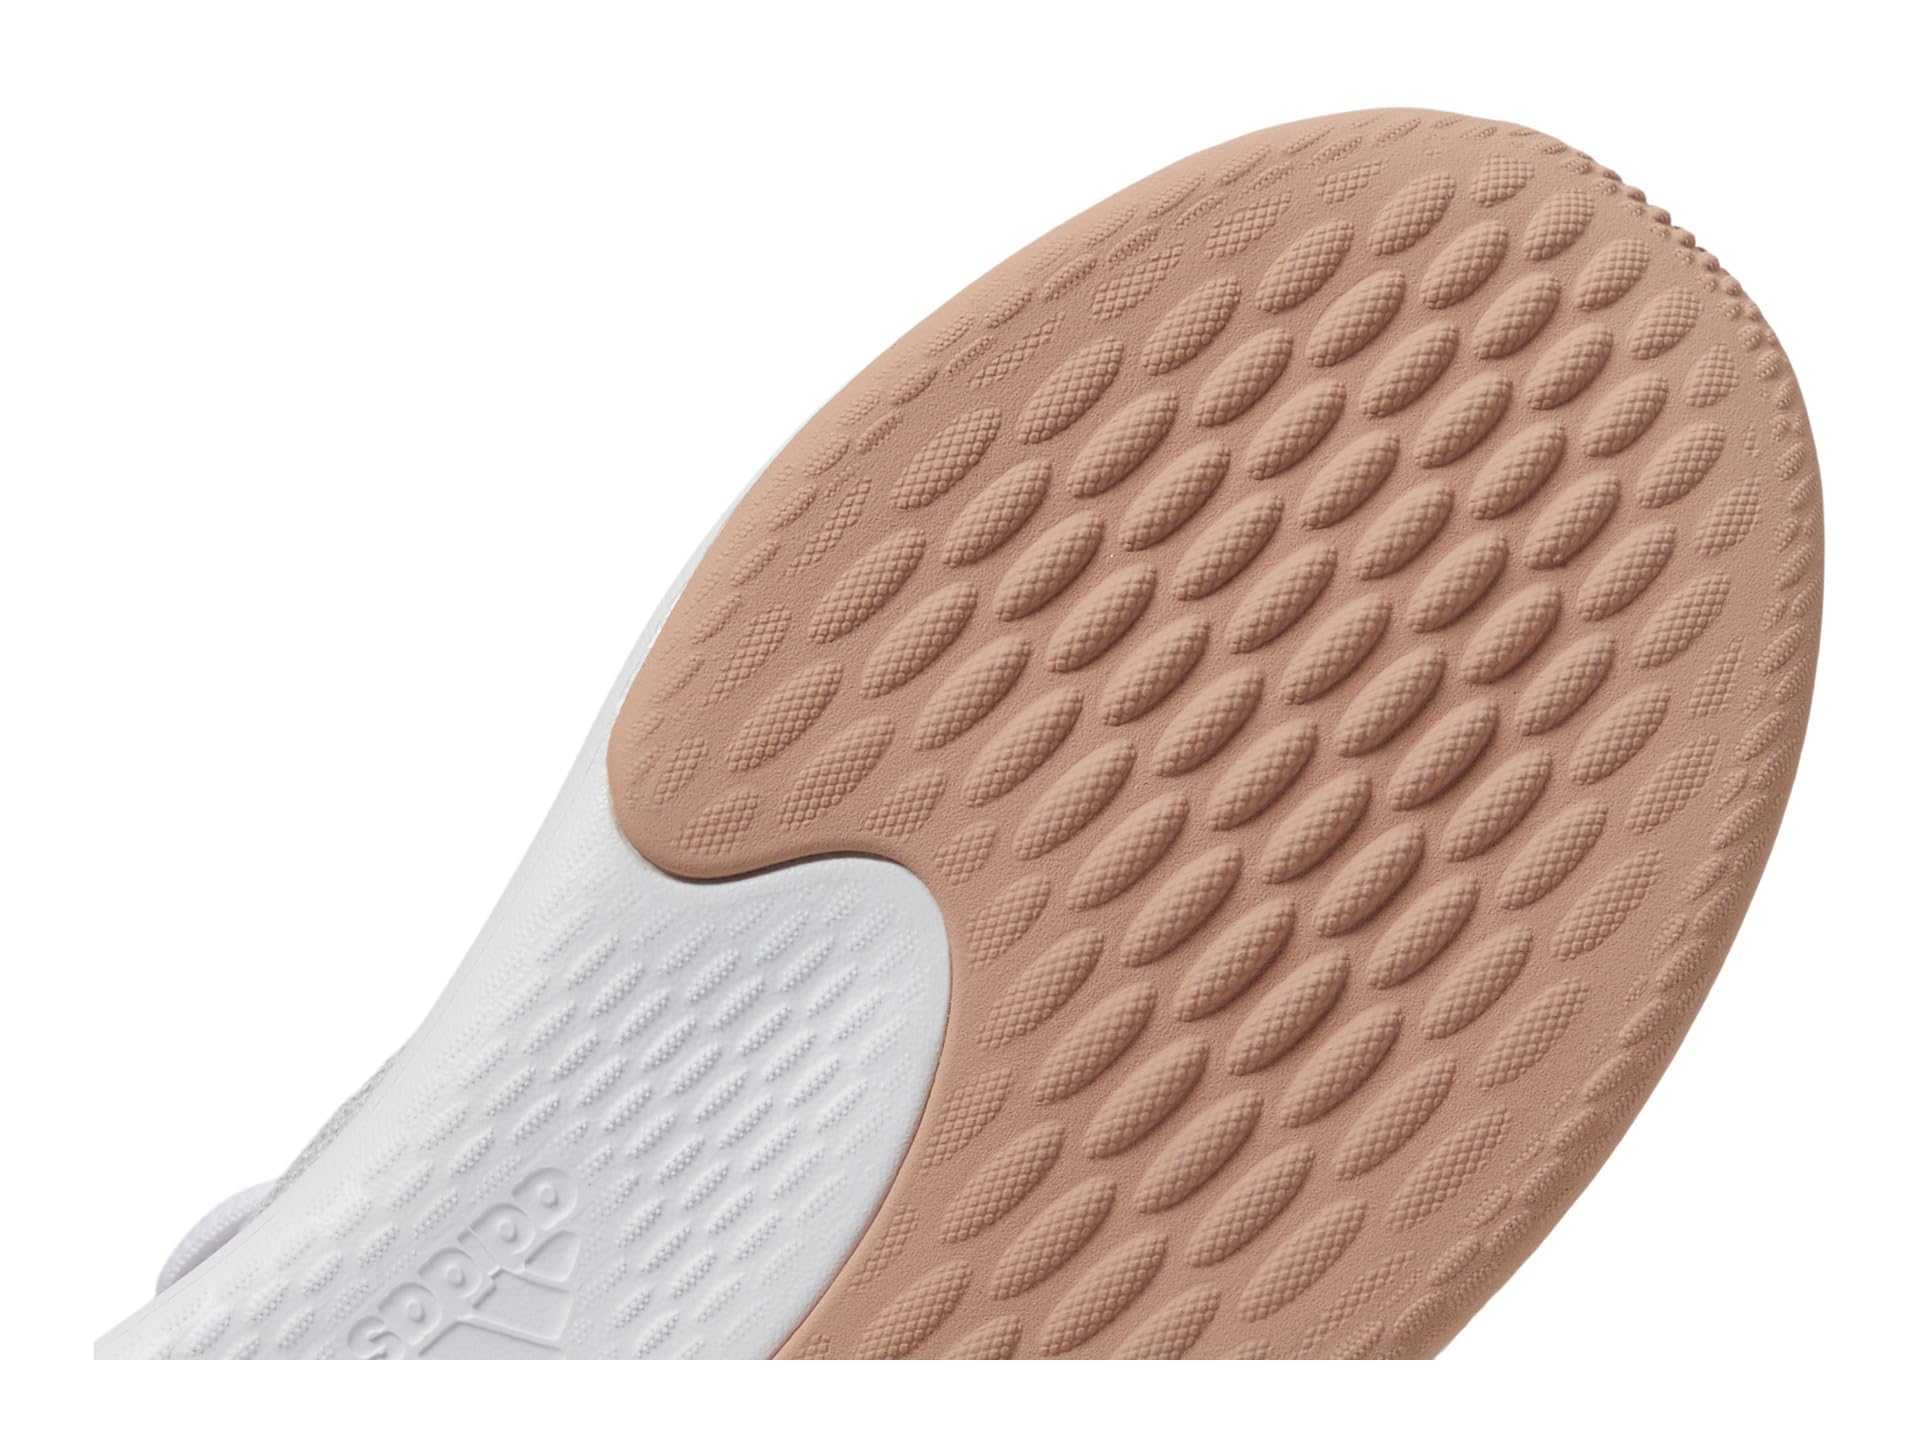 adidas Cloudfoam Pure SPW Grey Two/Footwear White/Wonder Clay 8 B (M)